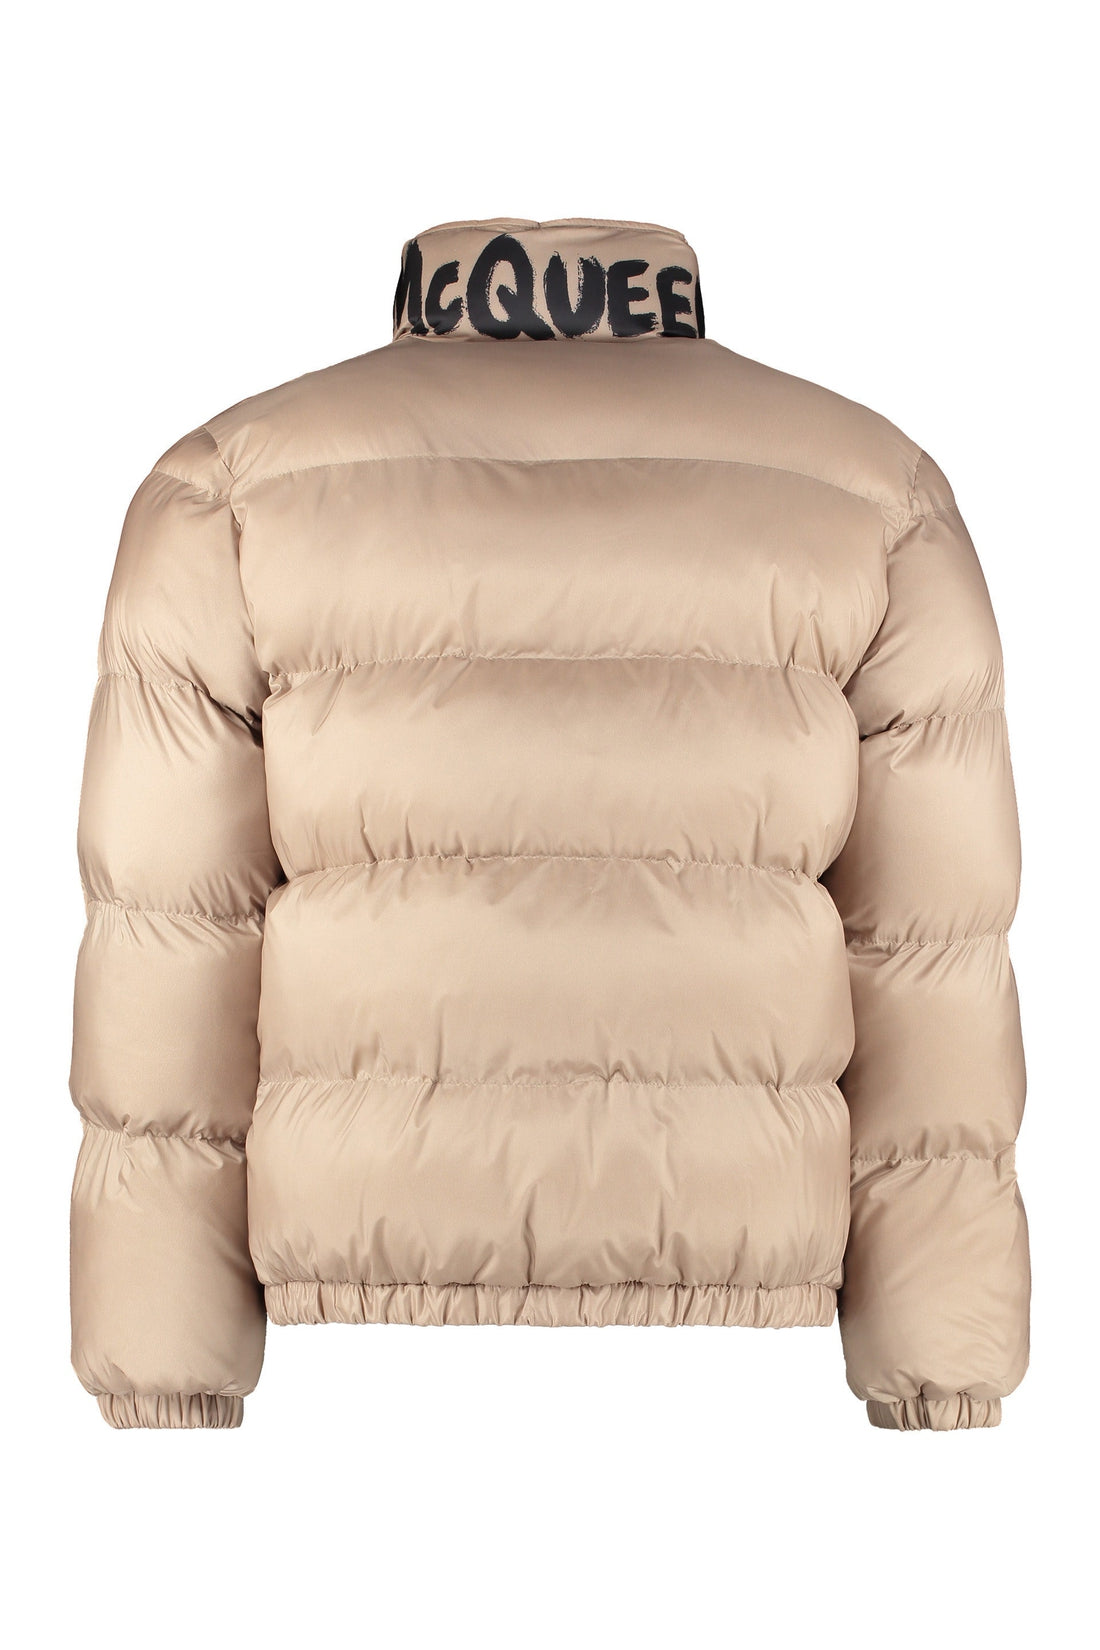 Alexander McQueen-OUTLET-SALE-Logo print short down jacket-ARCHIVIST